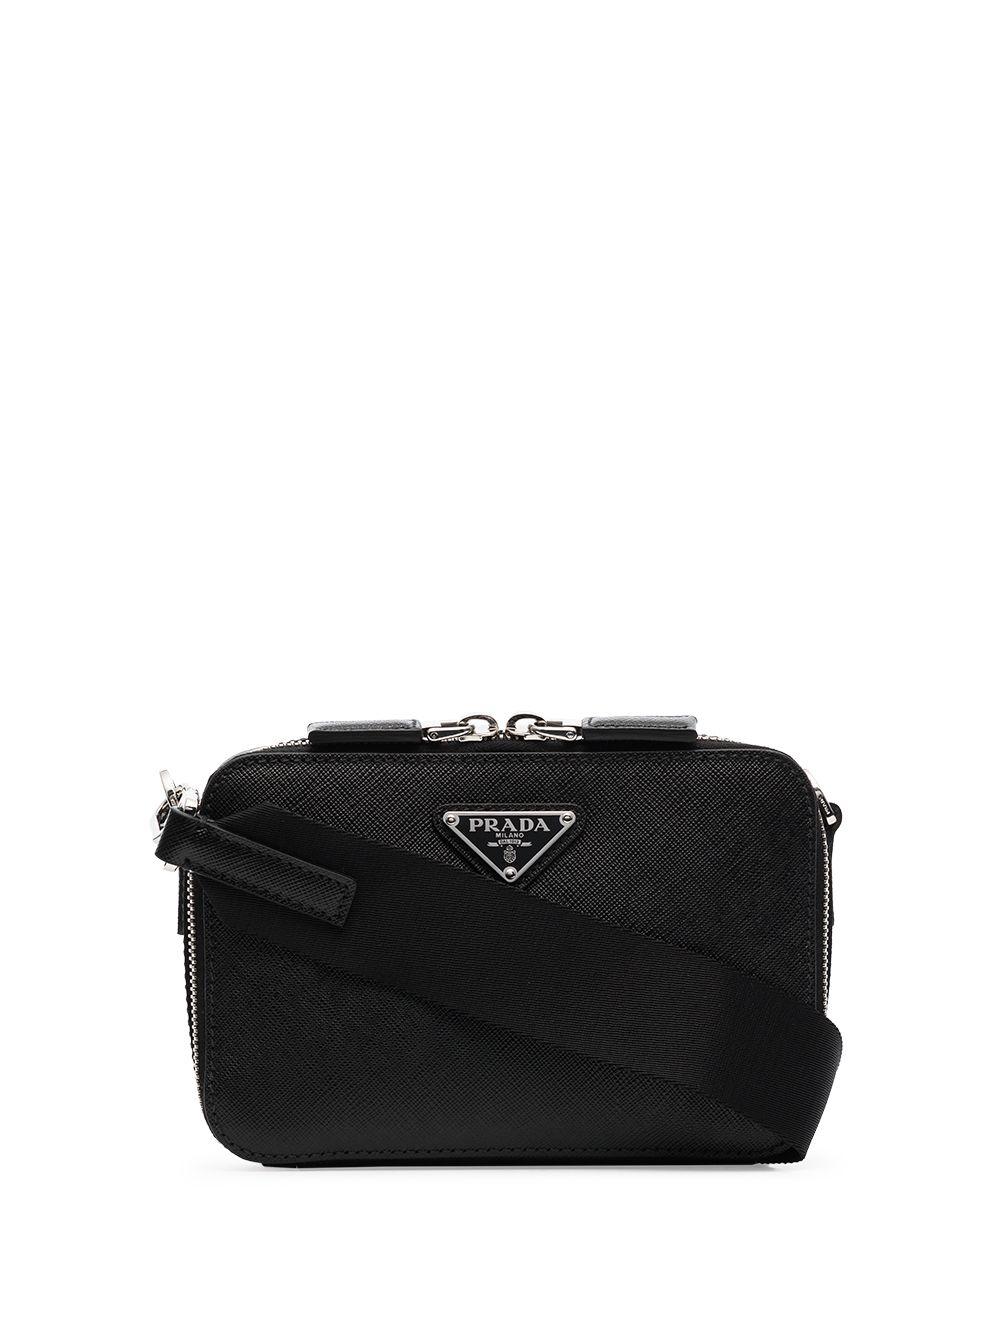 Prada Saffiano Brick Crossbody Bag in Black for Men | Lyst